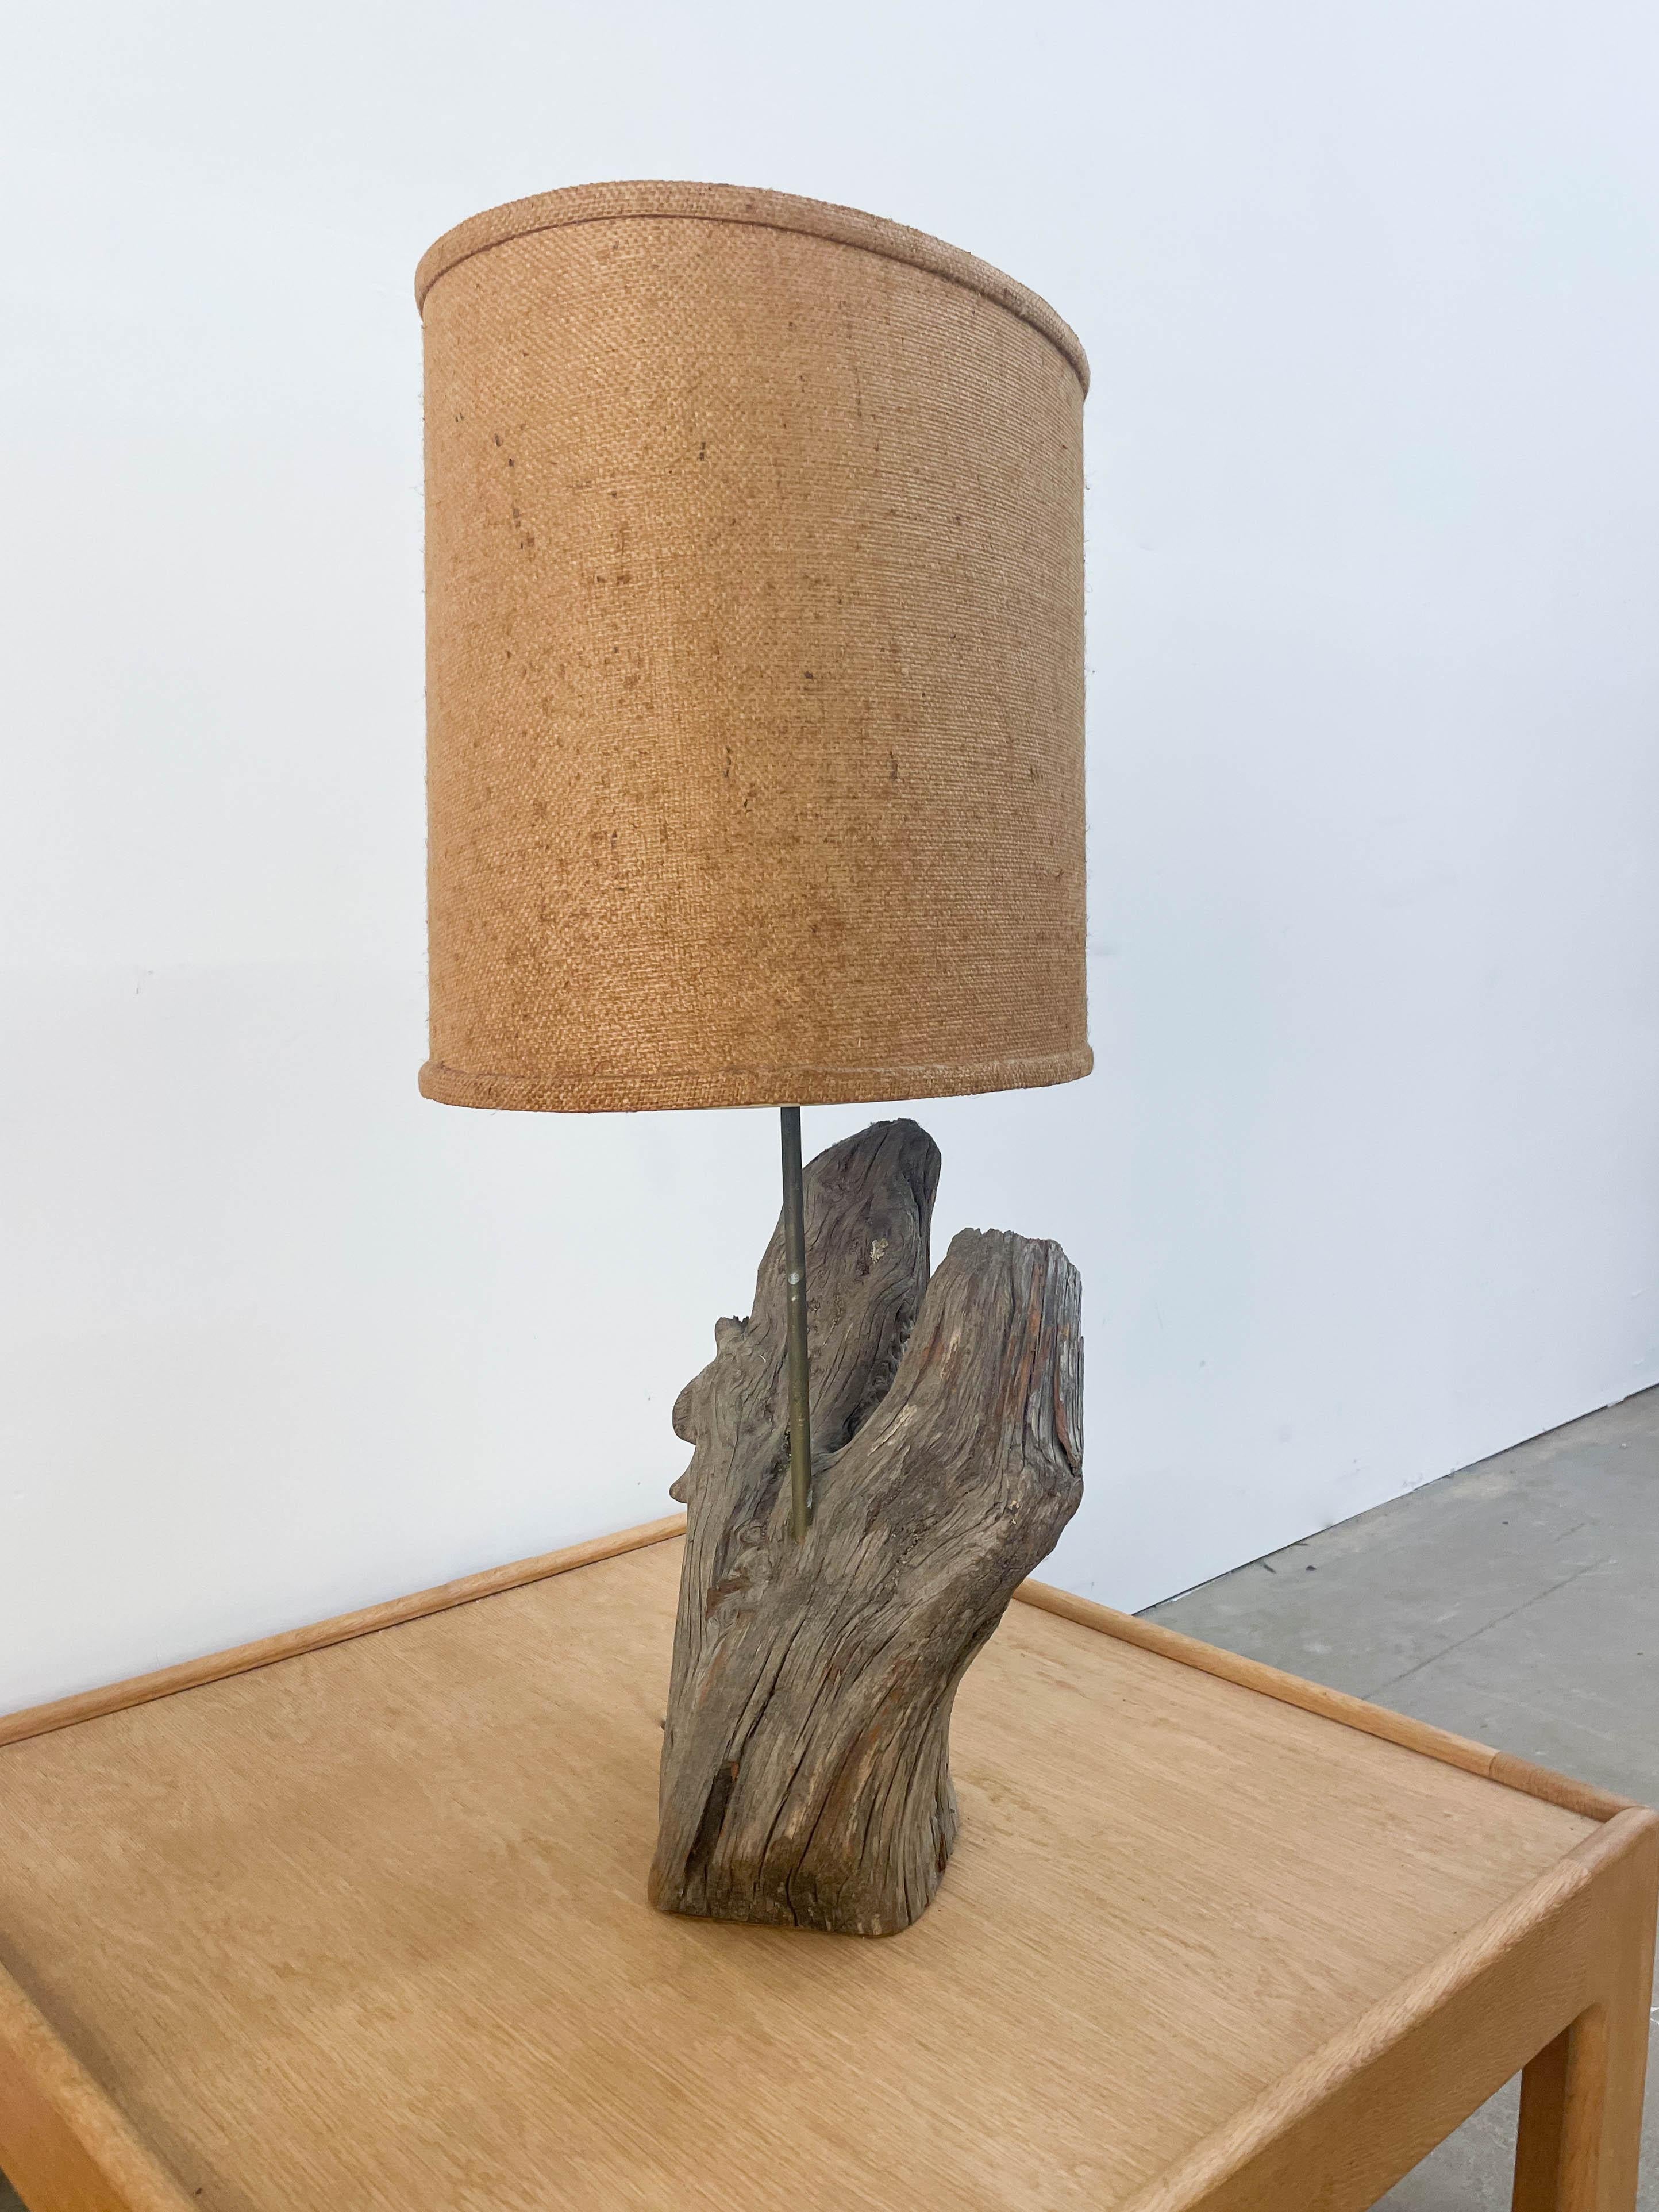 driftwood lamps